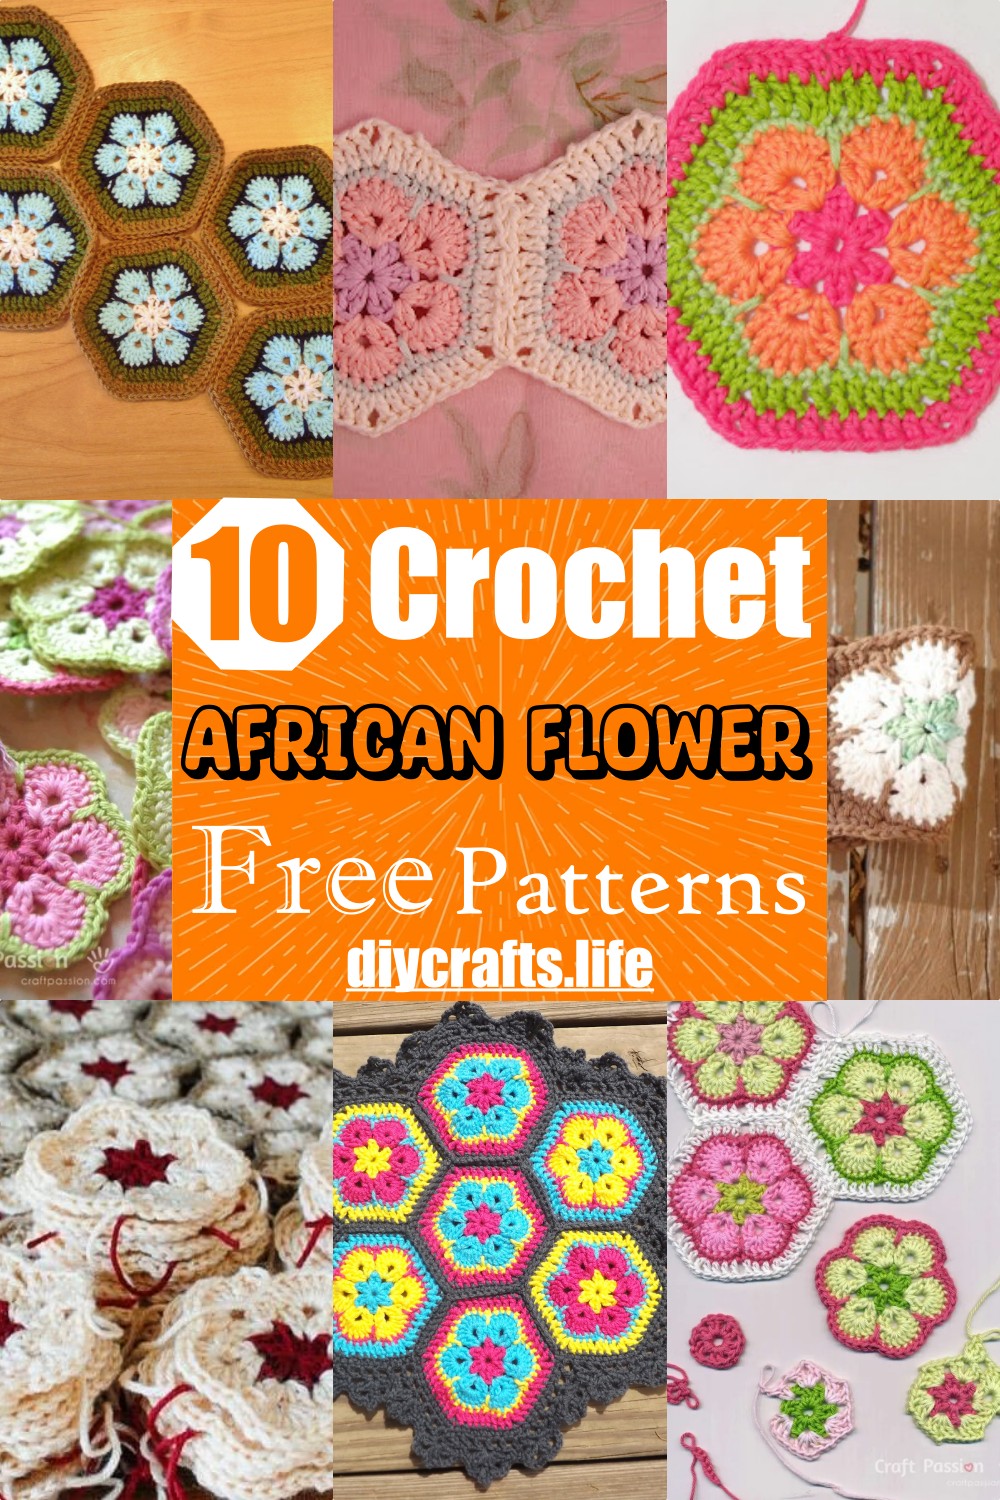 Free Crochet African Flower Patterns 1